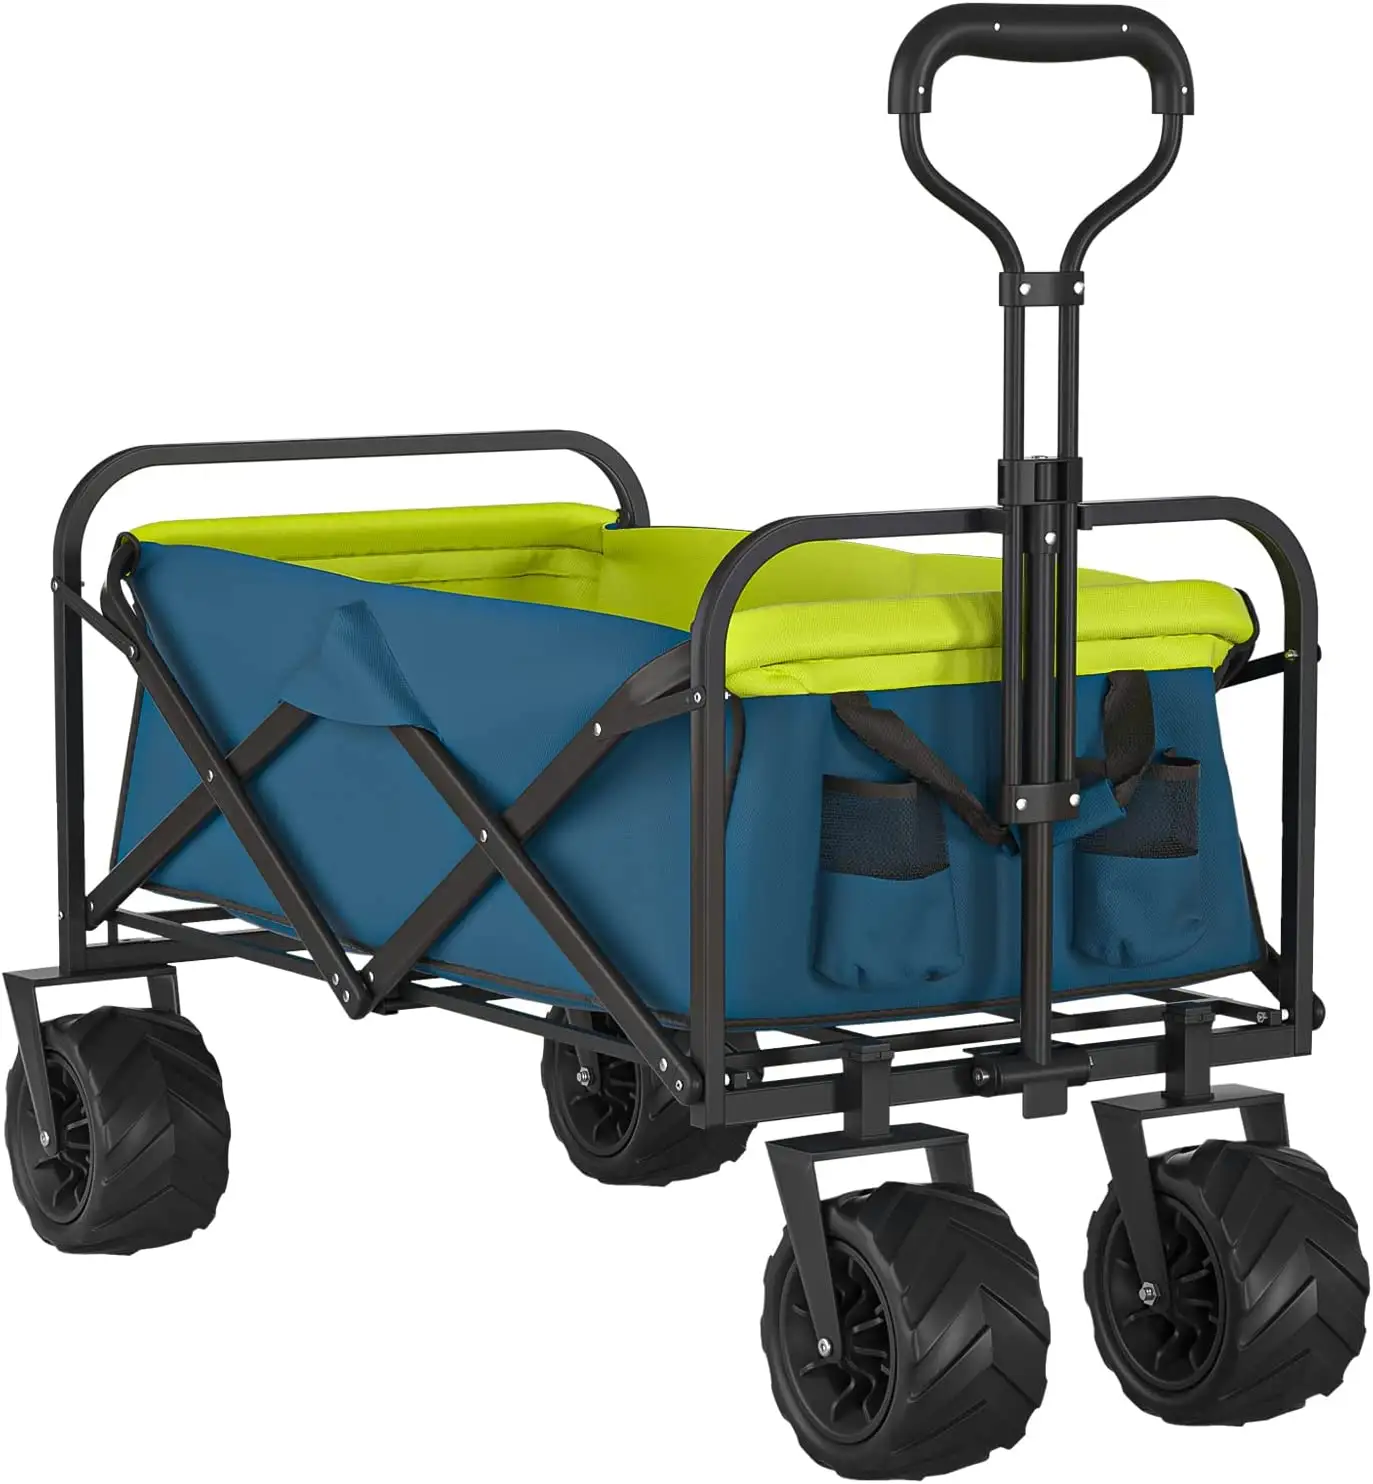 Woqi Heavy Duty Colla psible Folding All Terrain Utility mit einziehbarem Griff und Getränke haltern Beach Wagon Cart